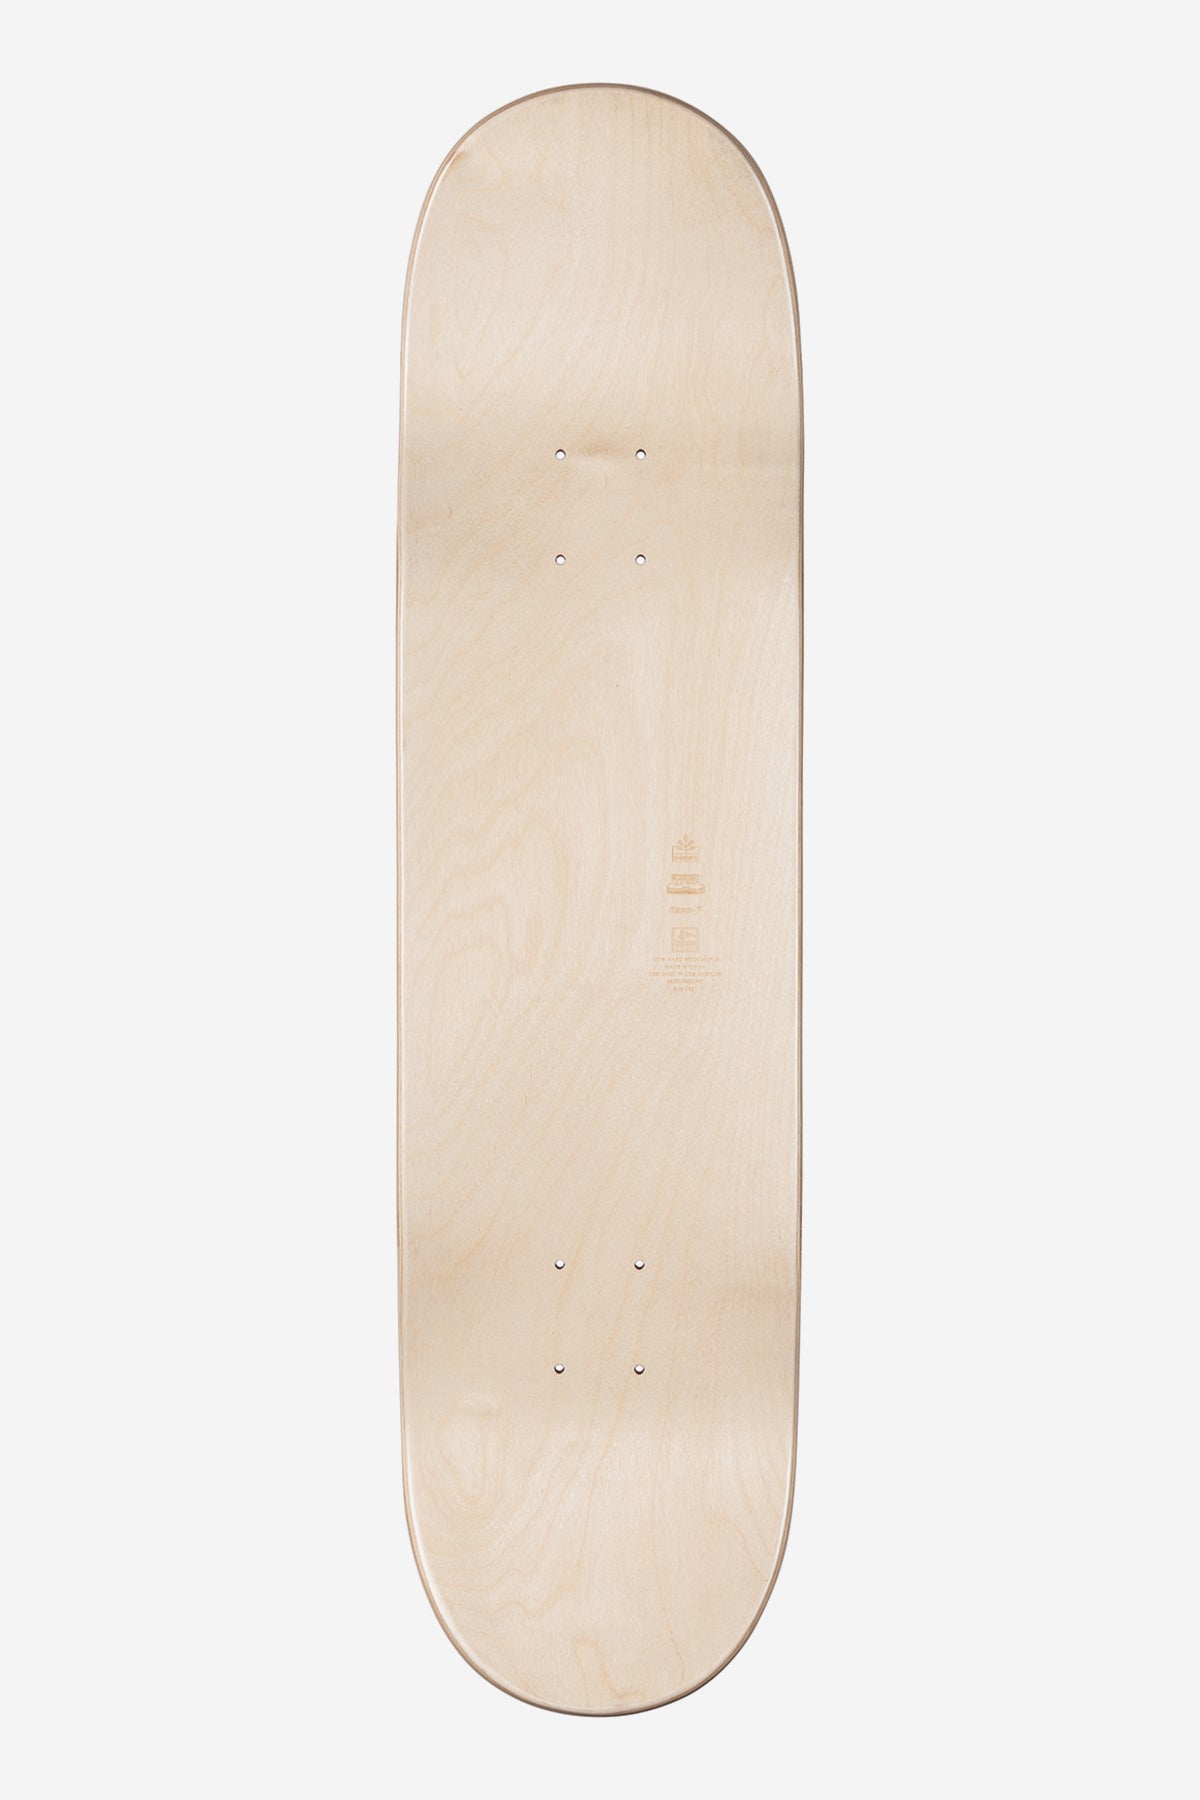 Globe - Gutstock - Sahara - 8.375" Skateboard Deck